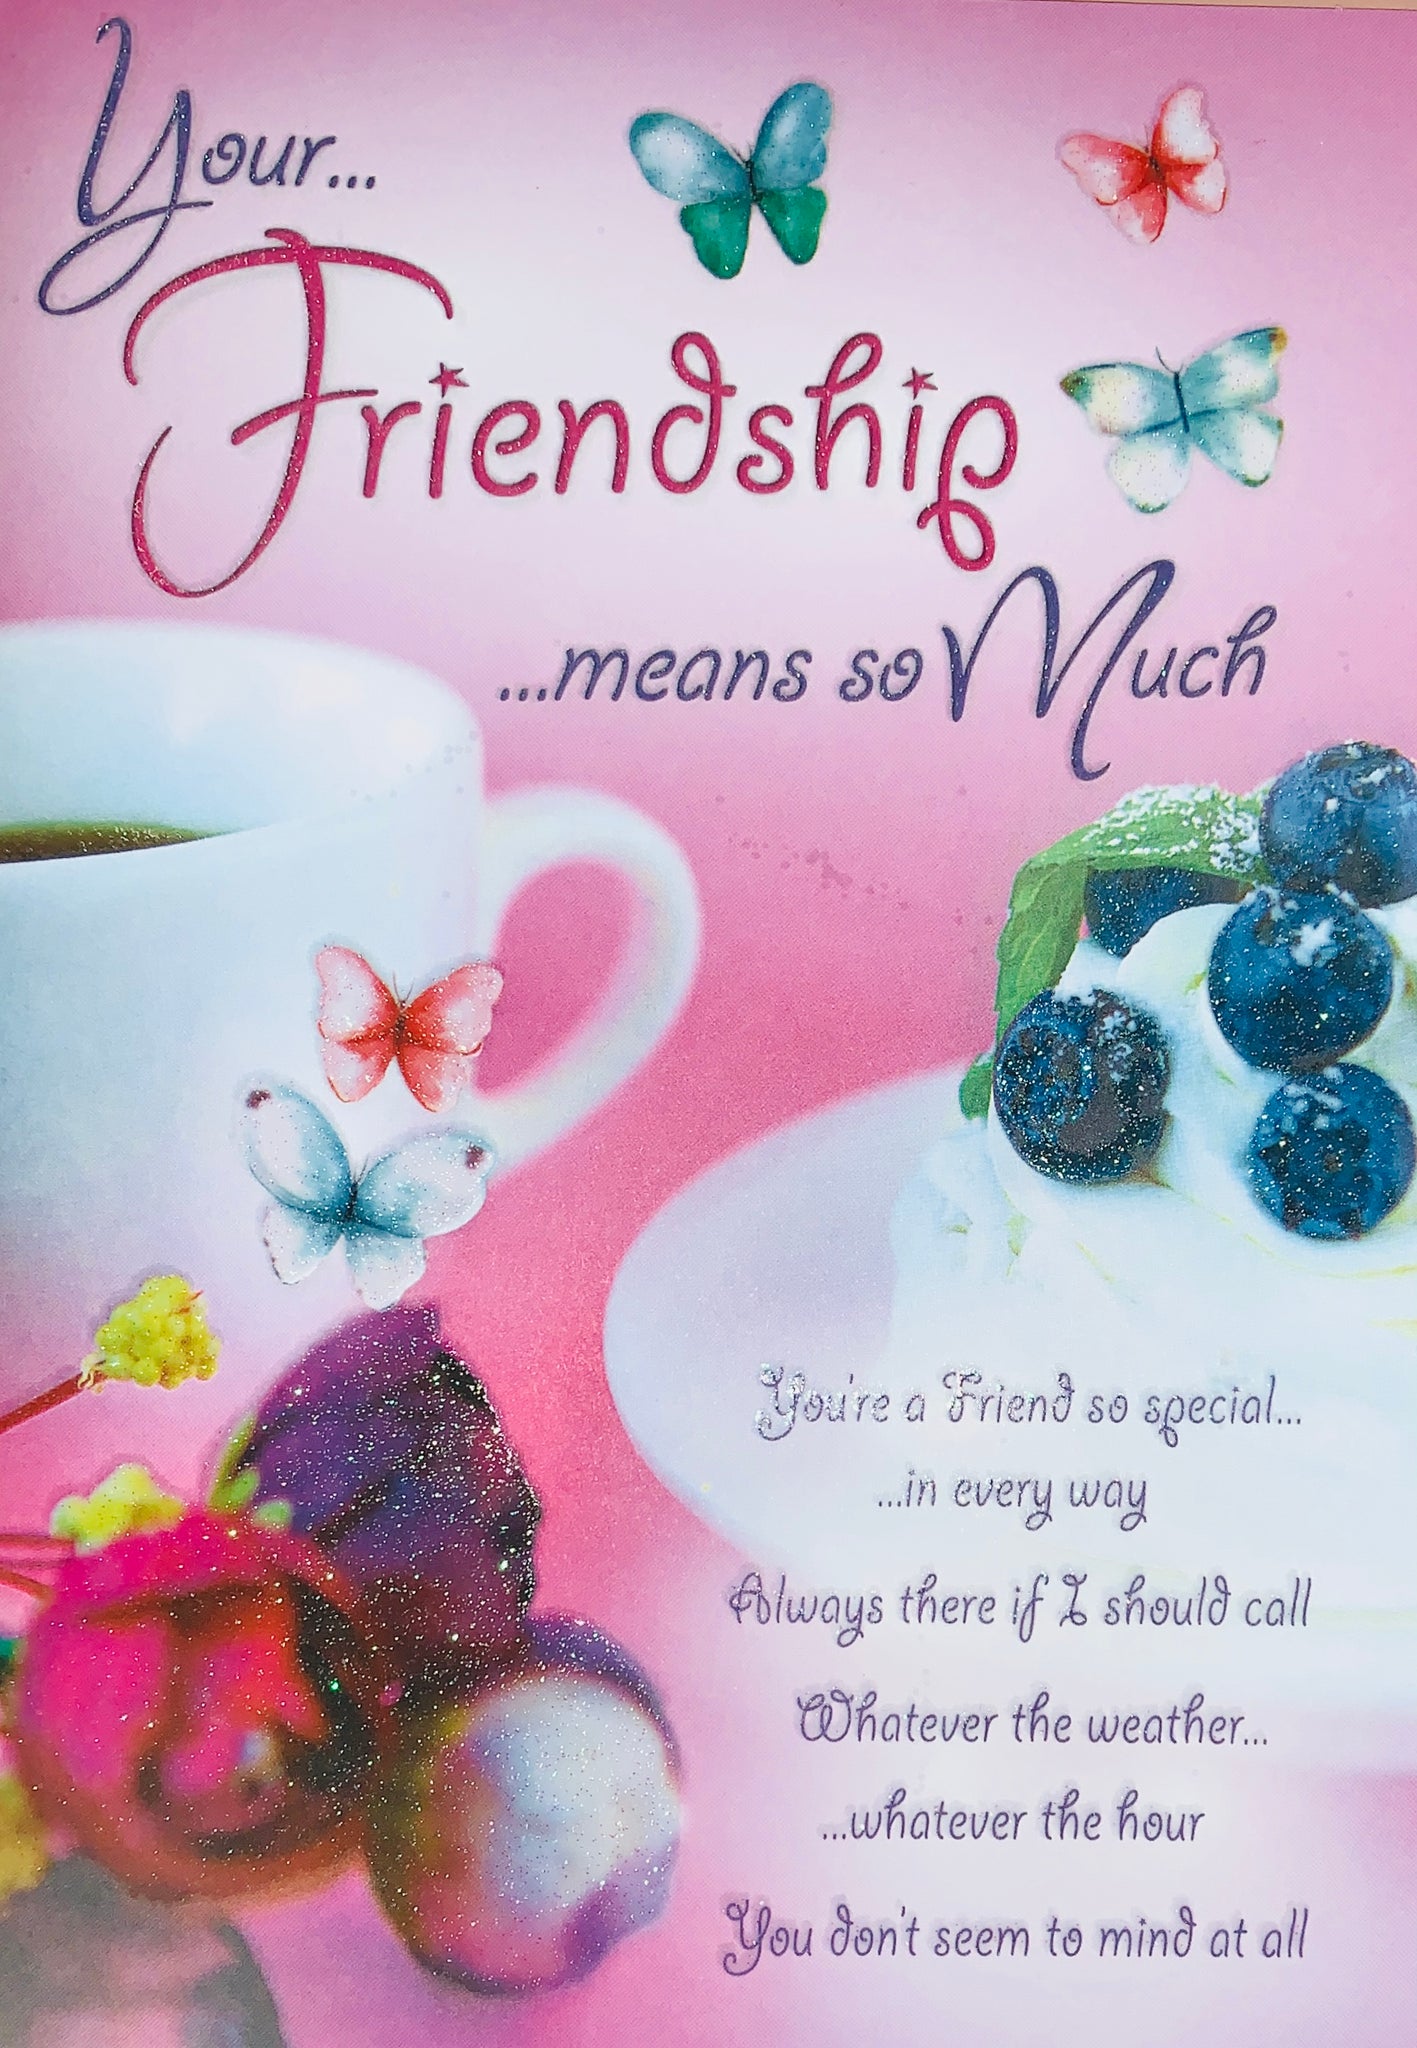 Friendship celebration card